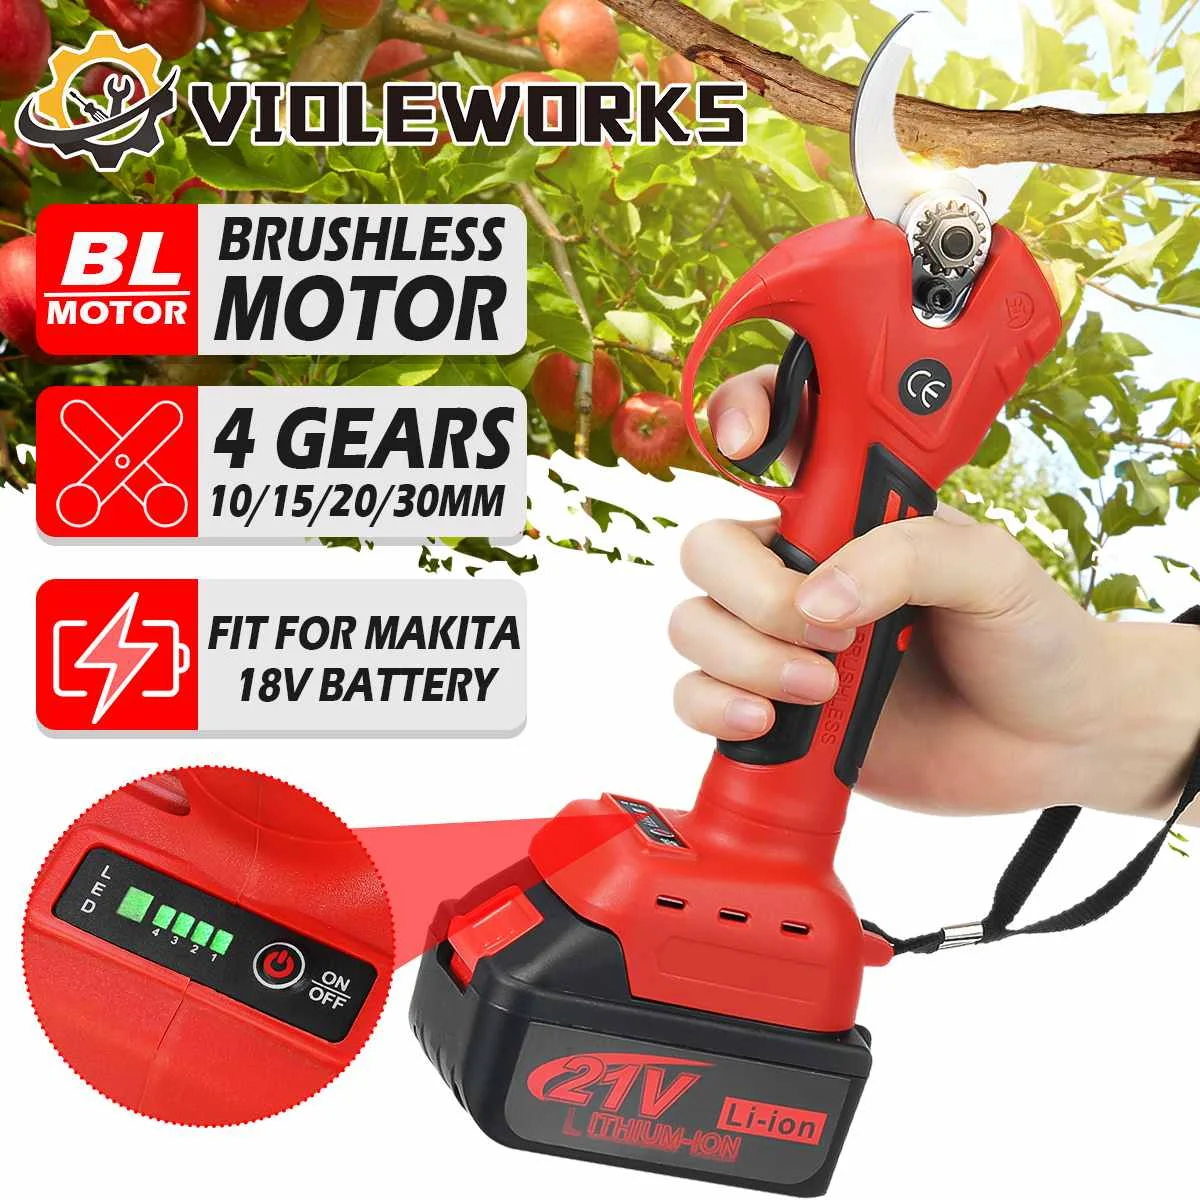 30MM Brushless Cordless Electric Pruner Pruning Shear Garden Tree Bonsai Pruning Shears Power Tool For Makita18V Battery